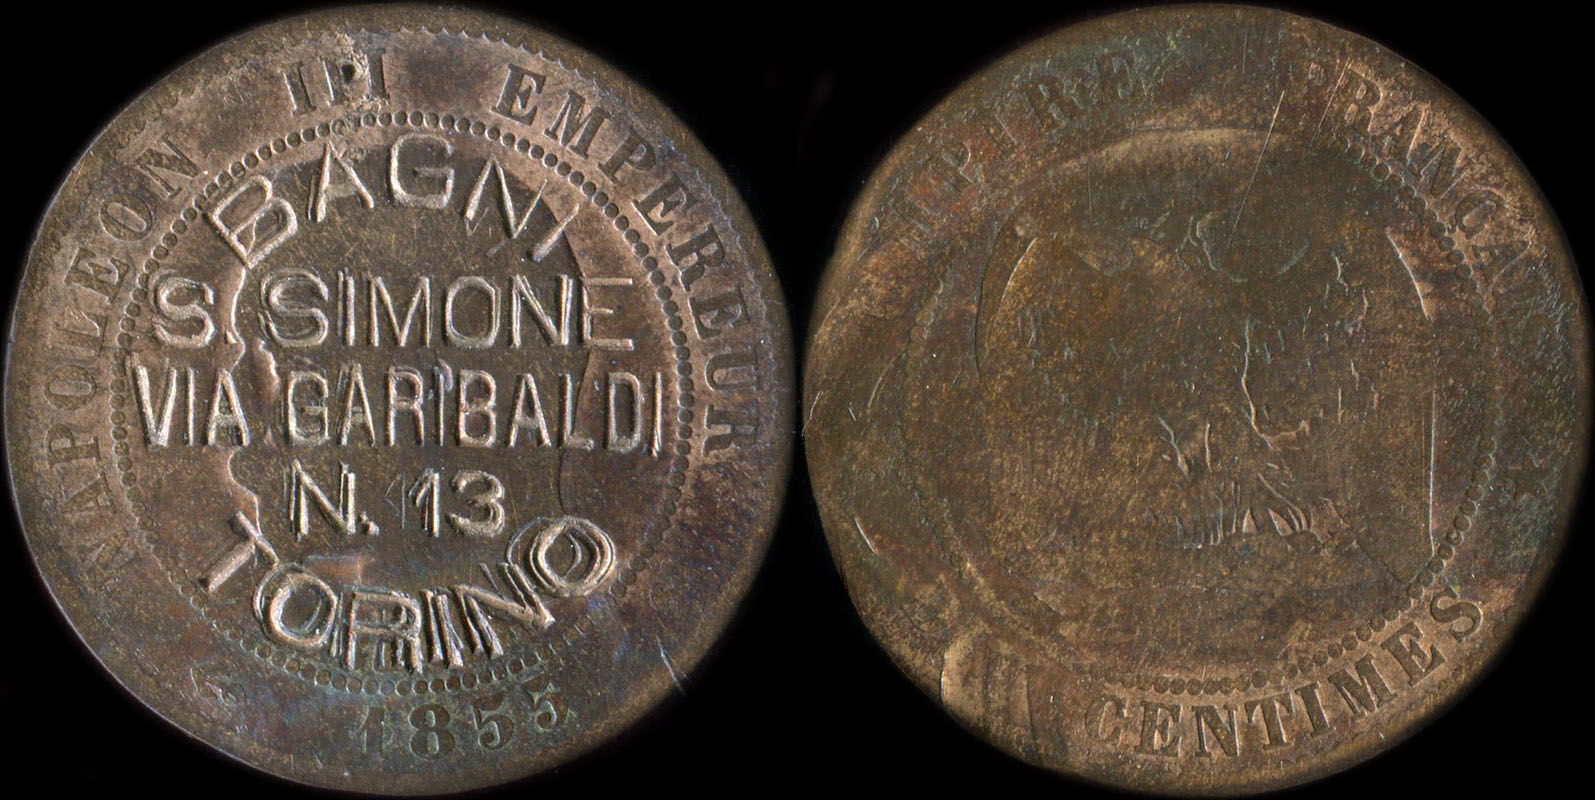 10 centimes Napoléon III 1855 tête nue avec surfrappe Bagni S.Simone via Garibaldi N.13 Torino